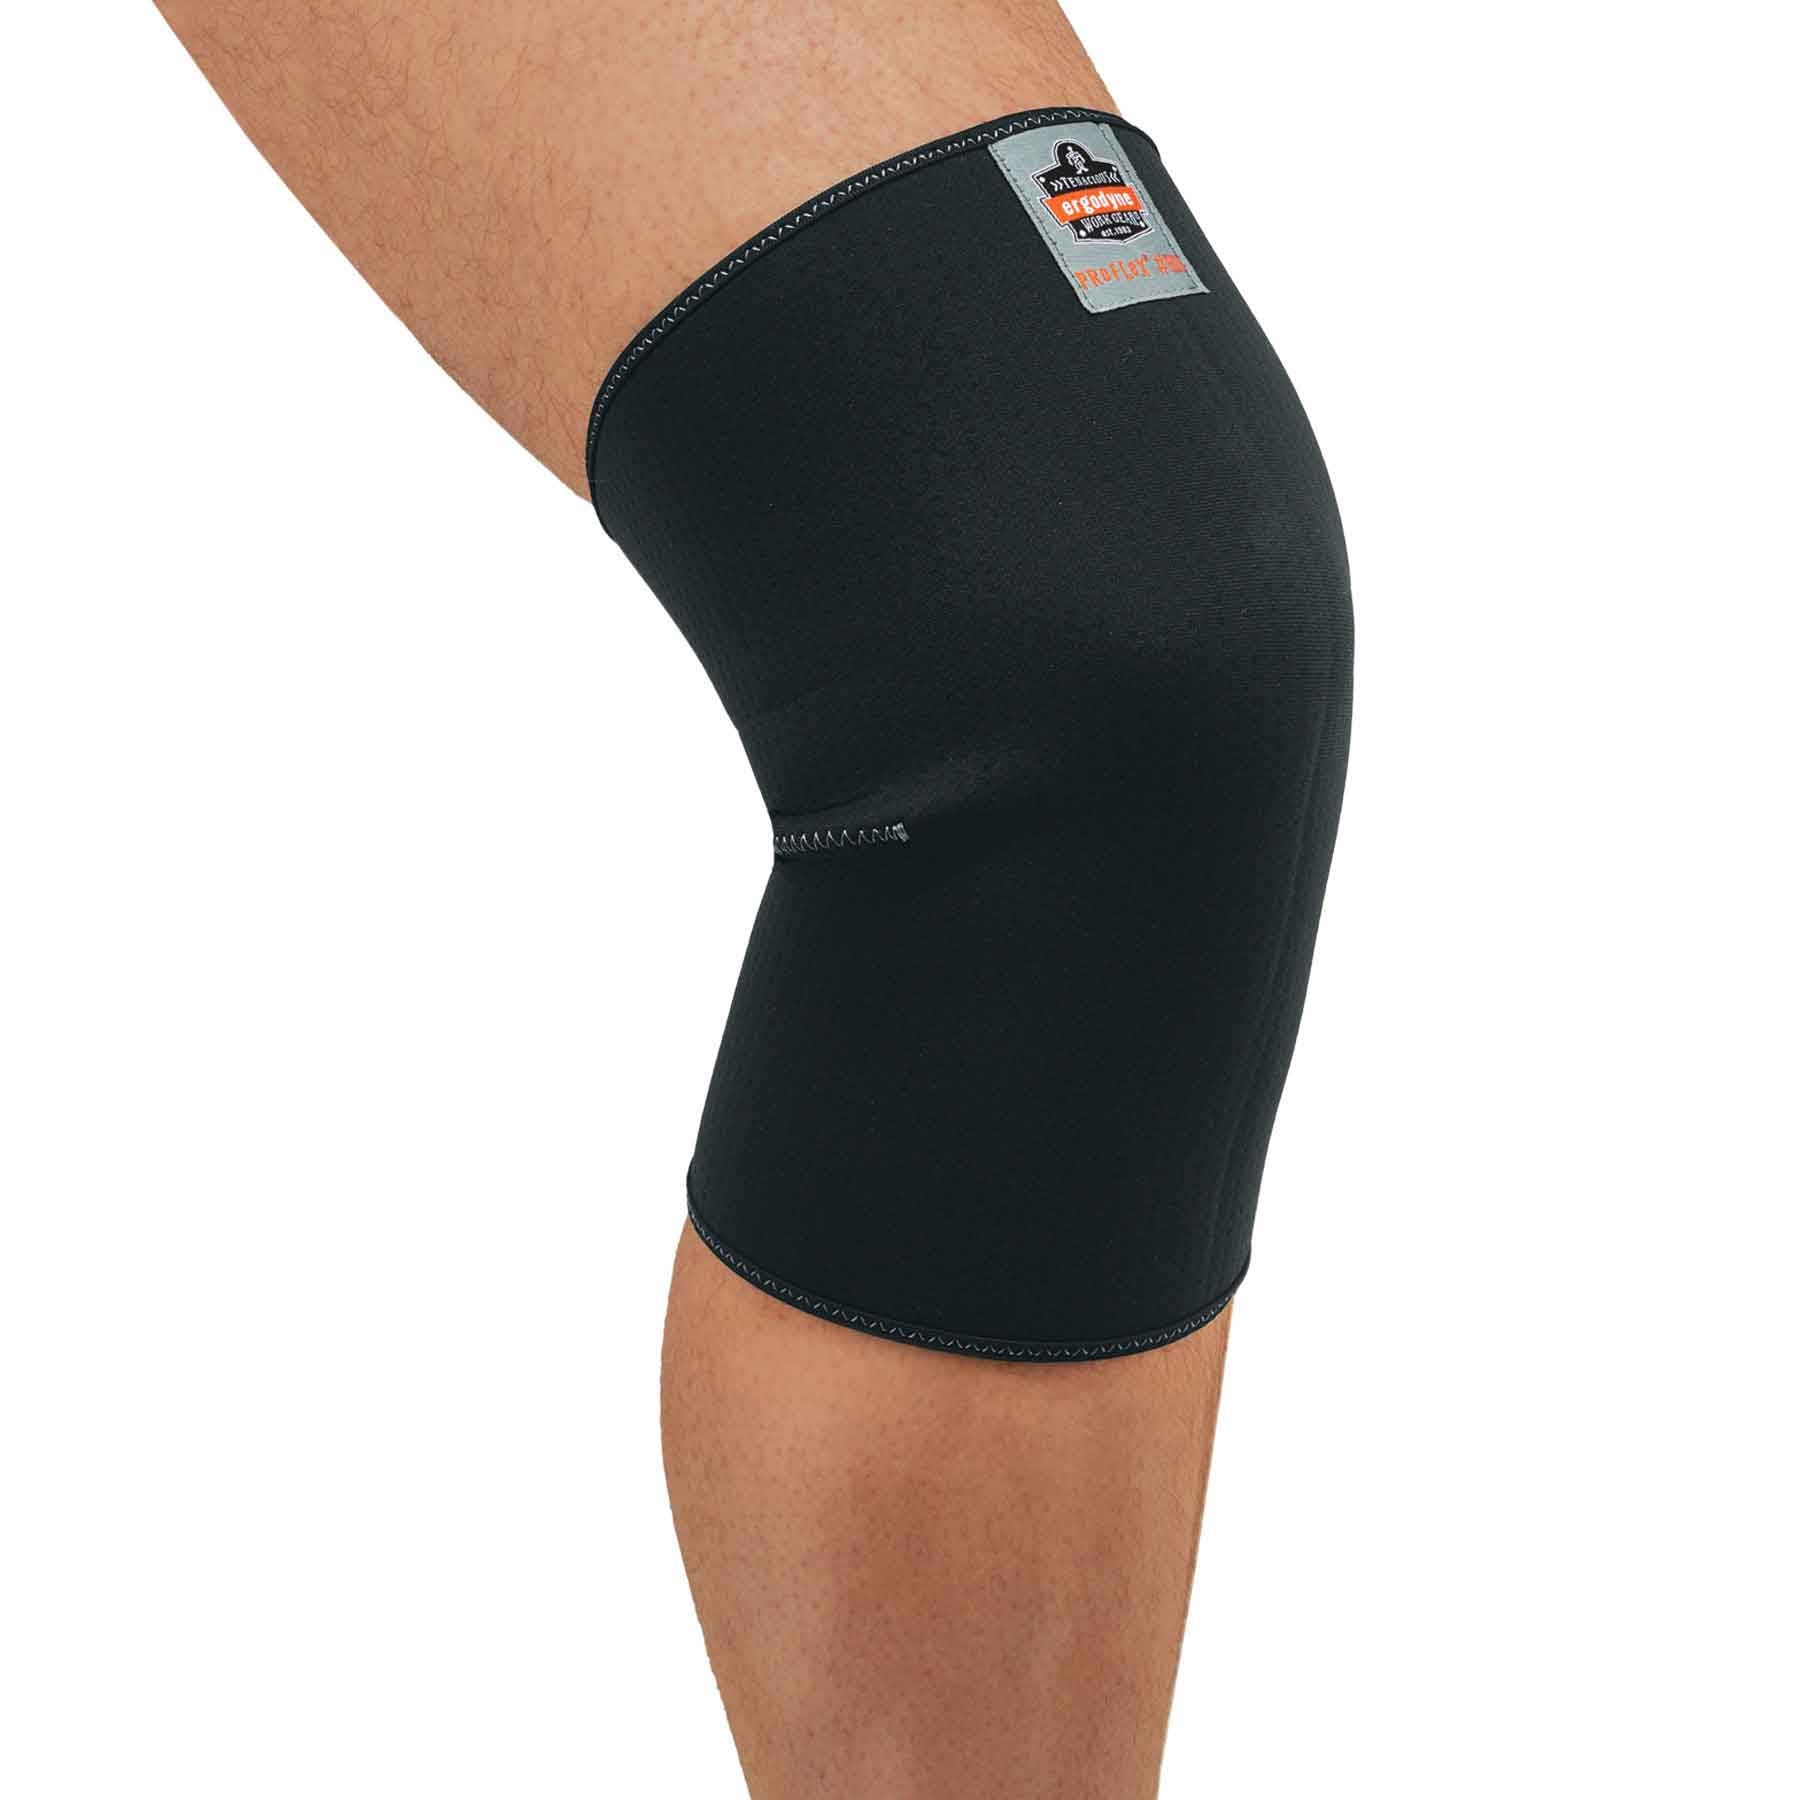 Ergodyne-ProFlex 600 Single-Layer Neoprene Knee Sleeve-eSafety Supplies, Inc